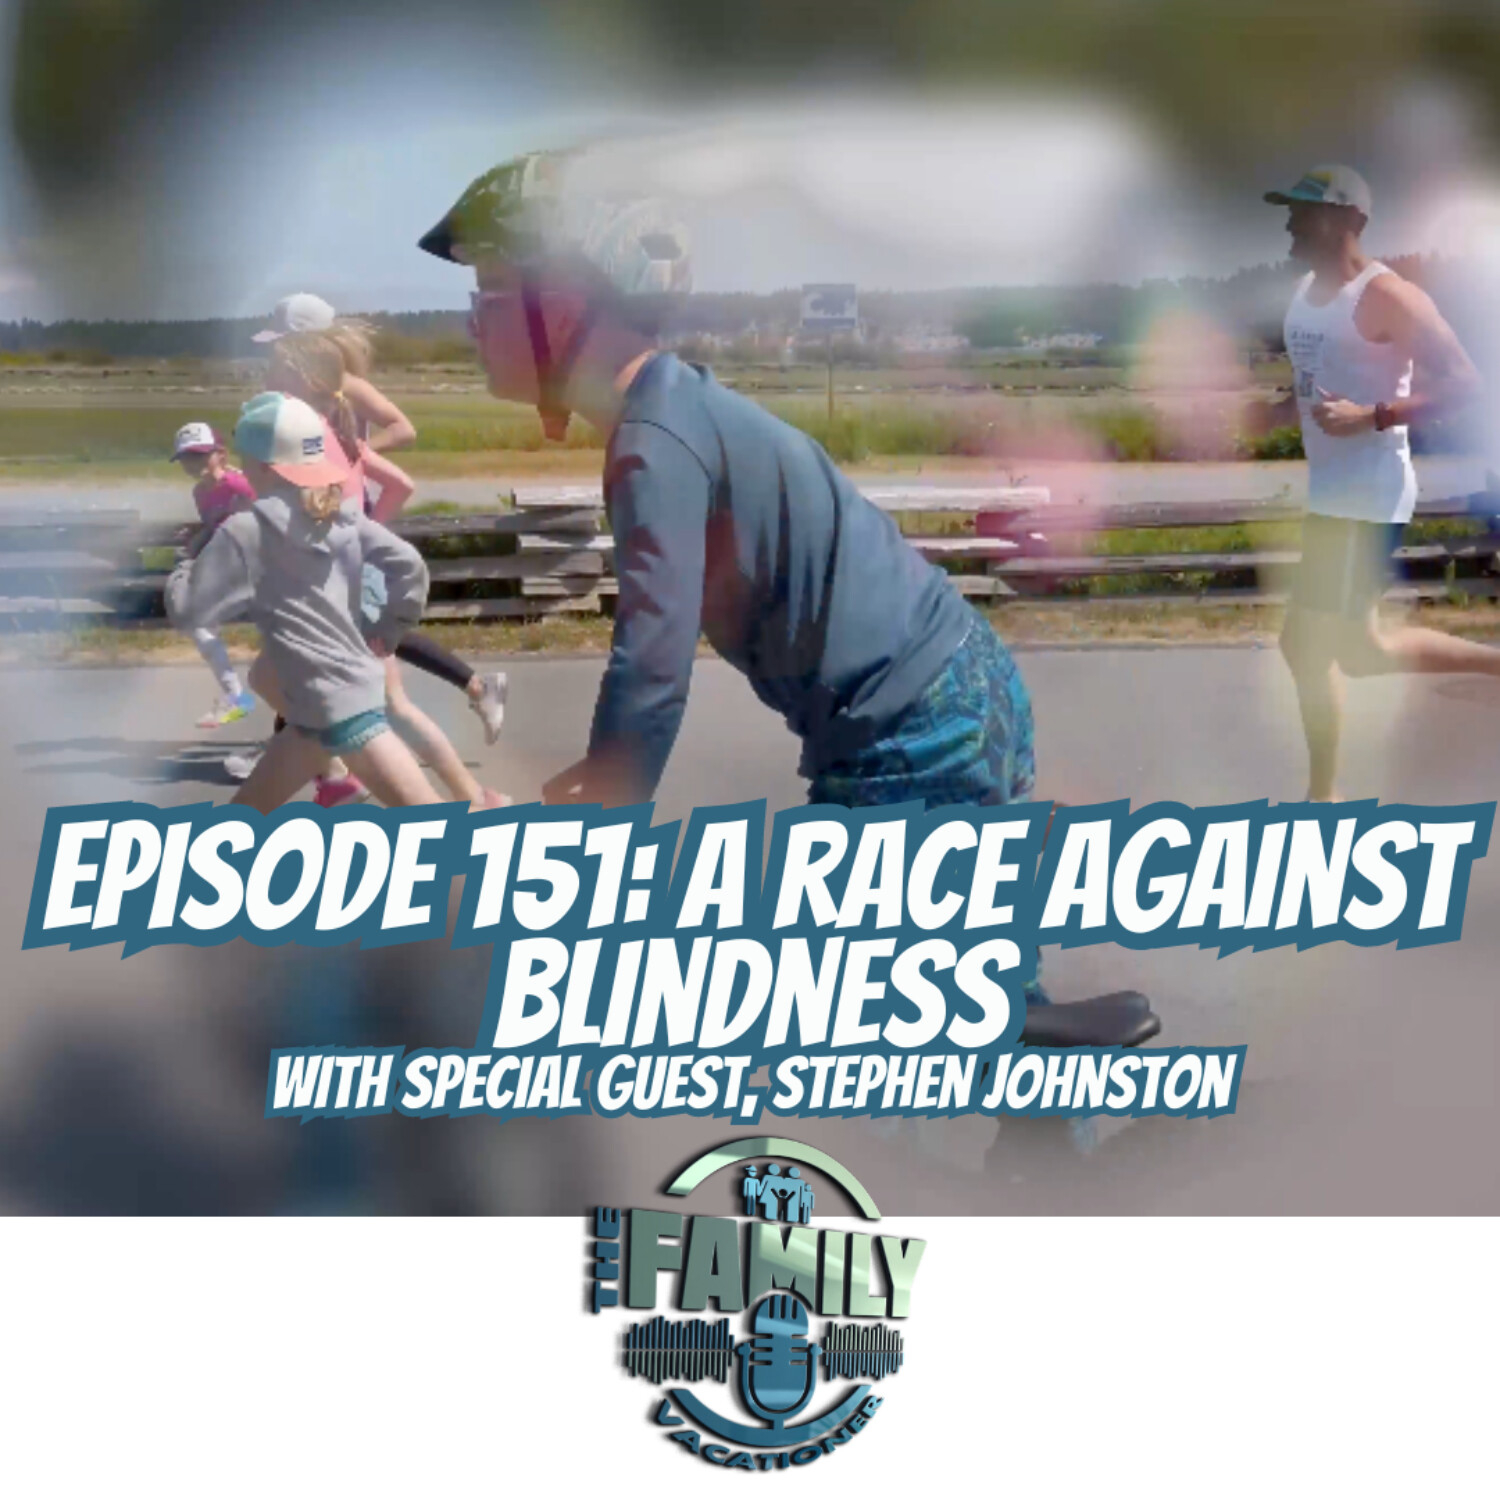 A Race Against Blindness